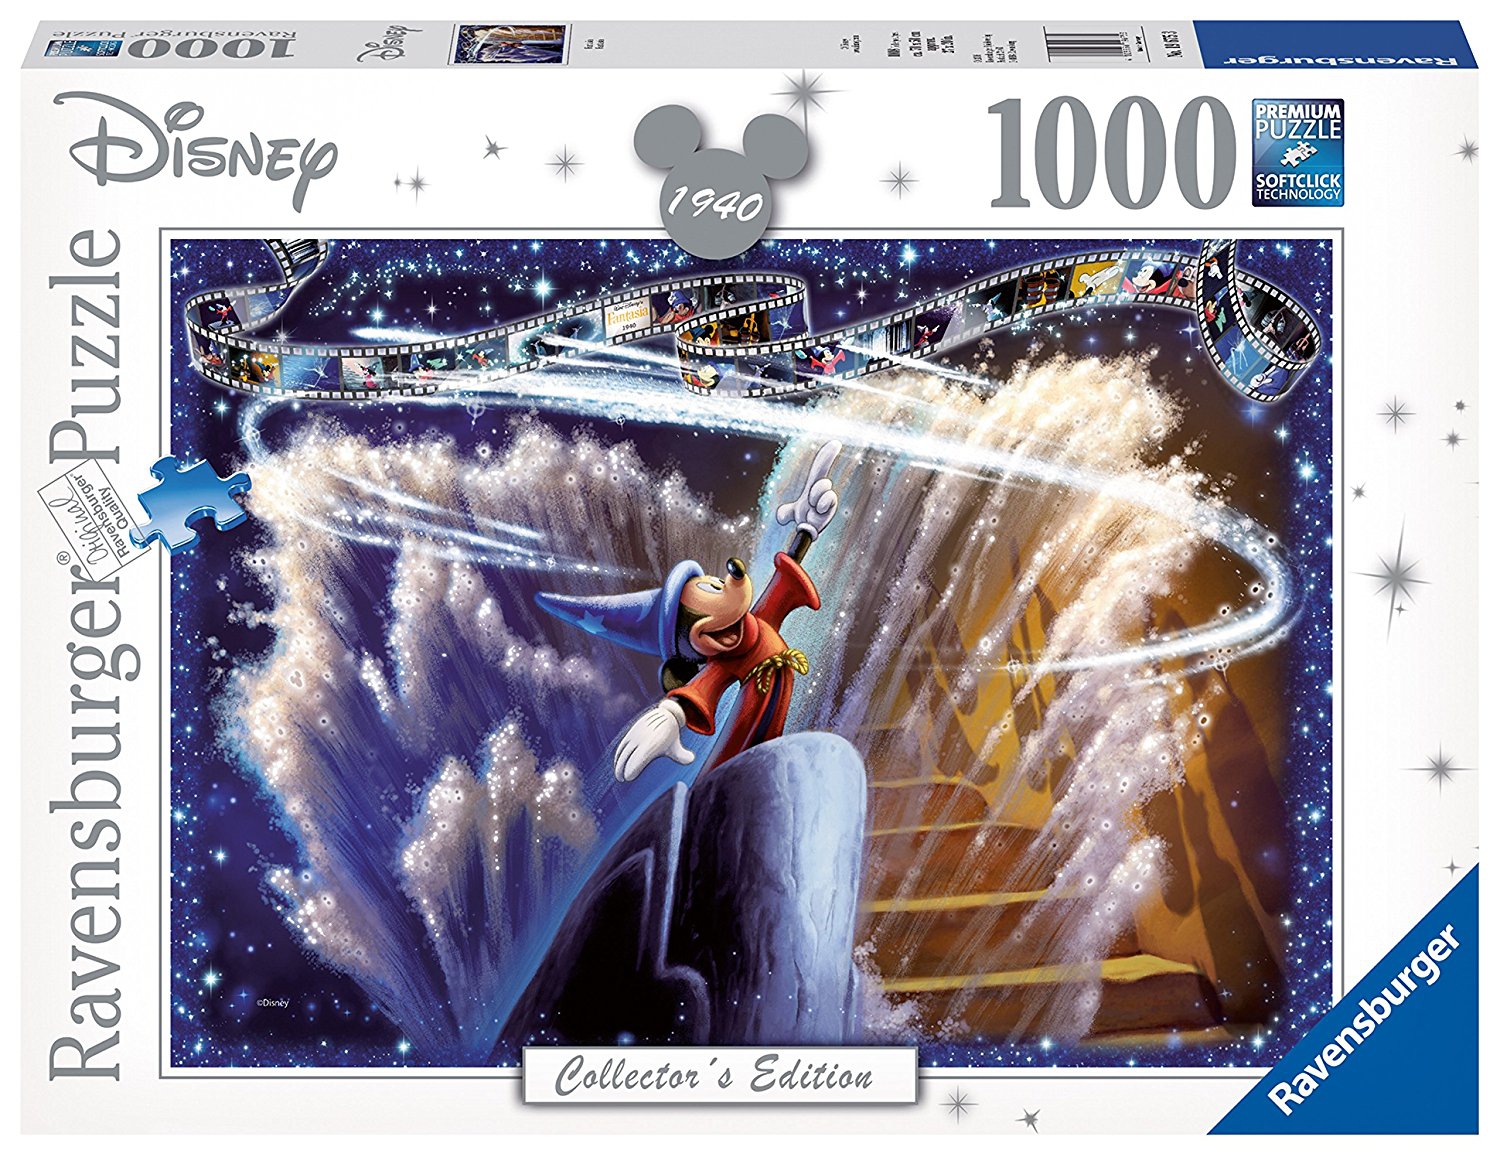 Disney Collector'S Edition ' Fantasia' 1000 Piece Jigsaw Puzzle Game